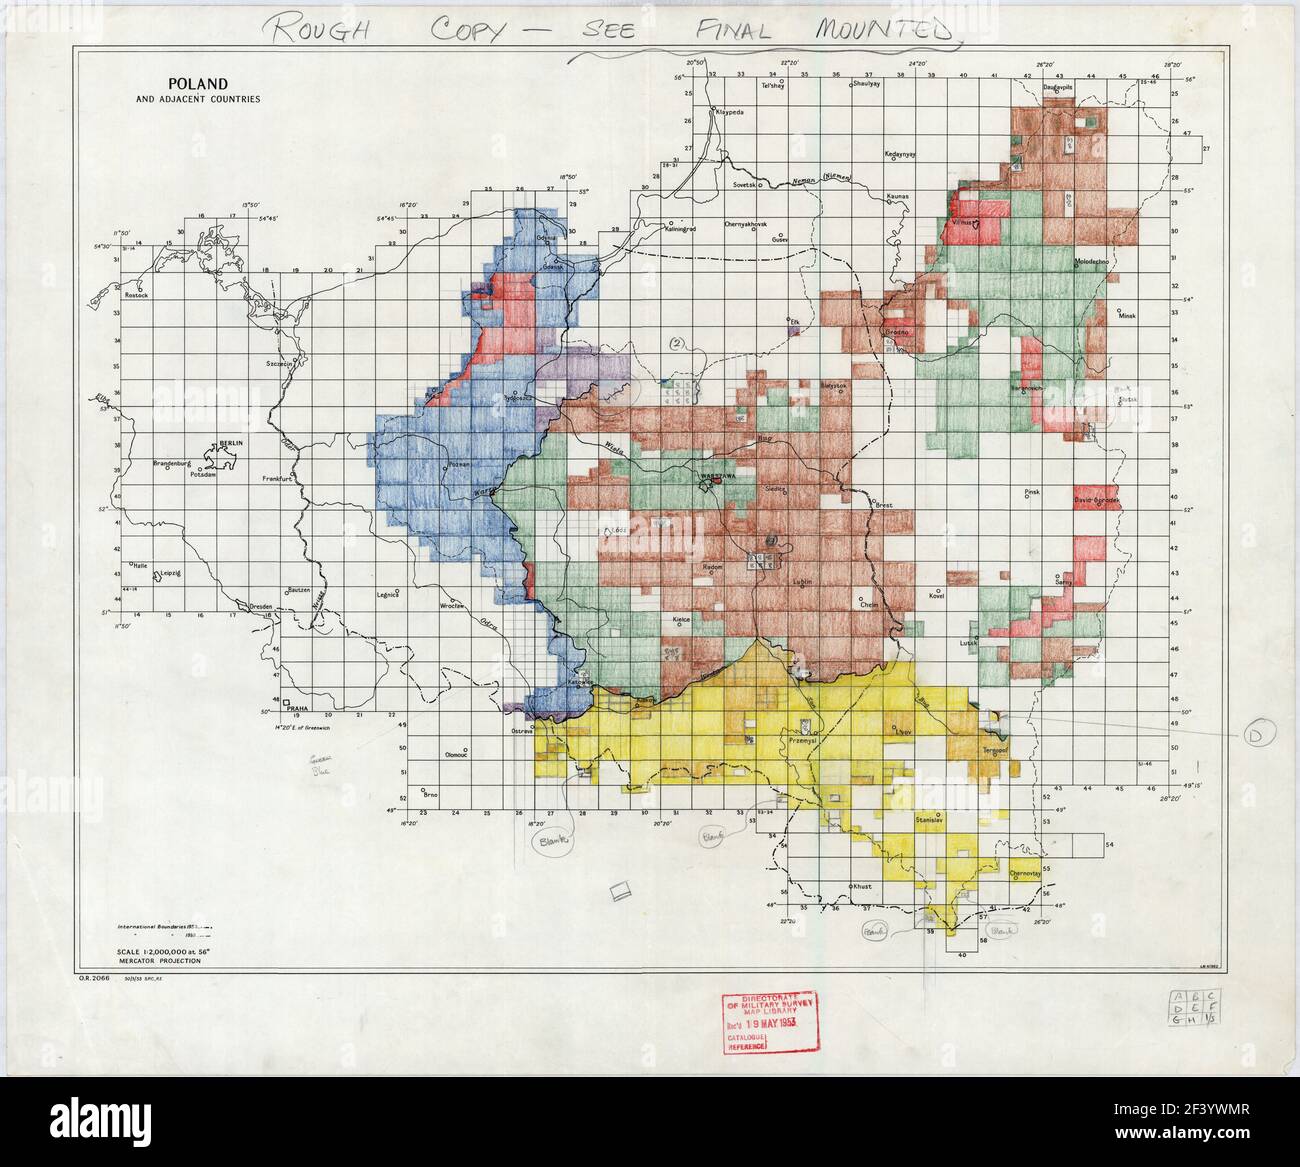 POLAND AND ADJACENT COUNTRIES intern boundaries blank 1938 1953 Stock Photo